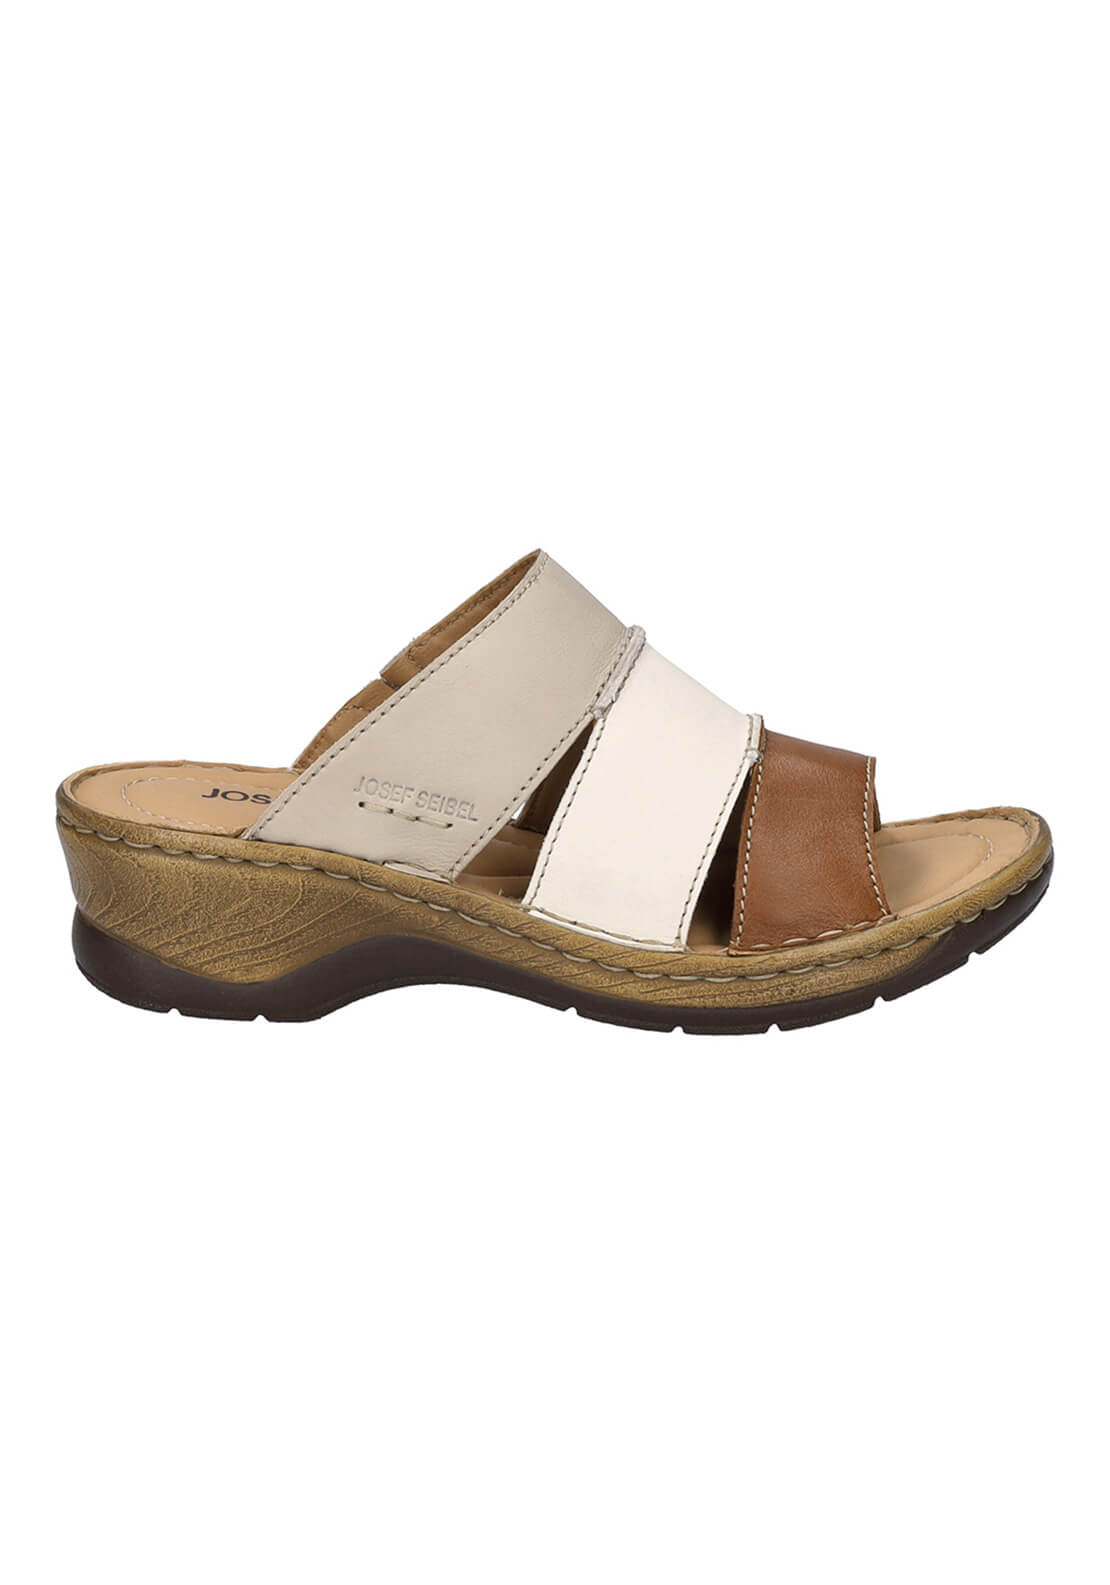 Josef Seibel Catalonia 86 Wedge Sandals - Cognac 4 Shaws Department Stores